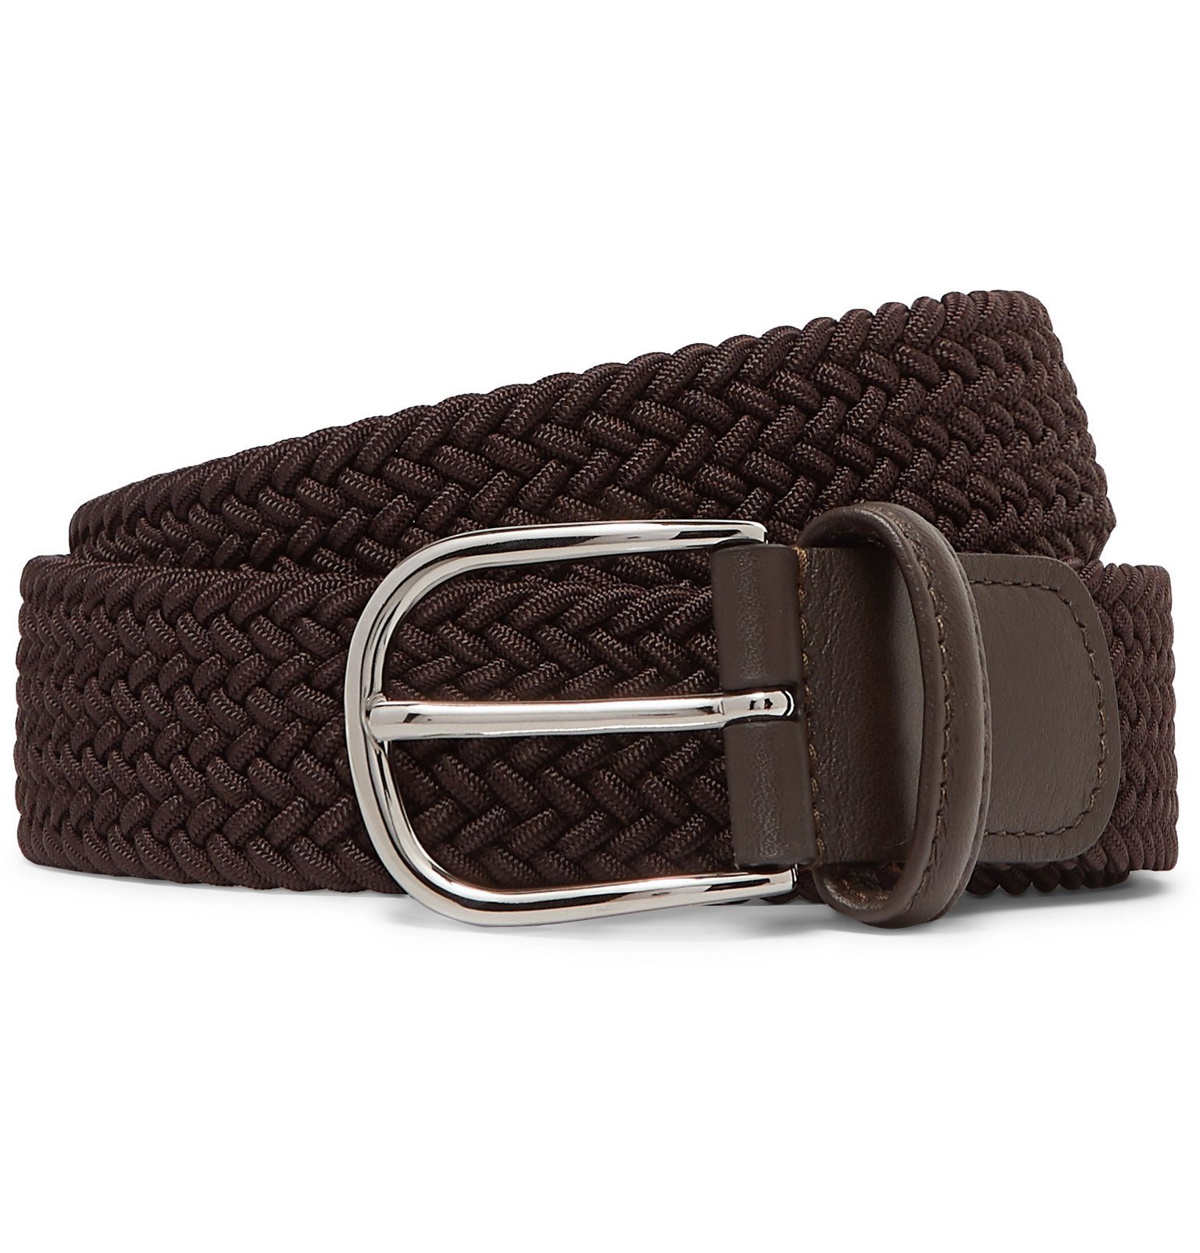 Anderson's 3cm Dark-Brown Leather Belt - Men - Dark Brown Belts